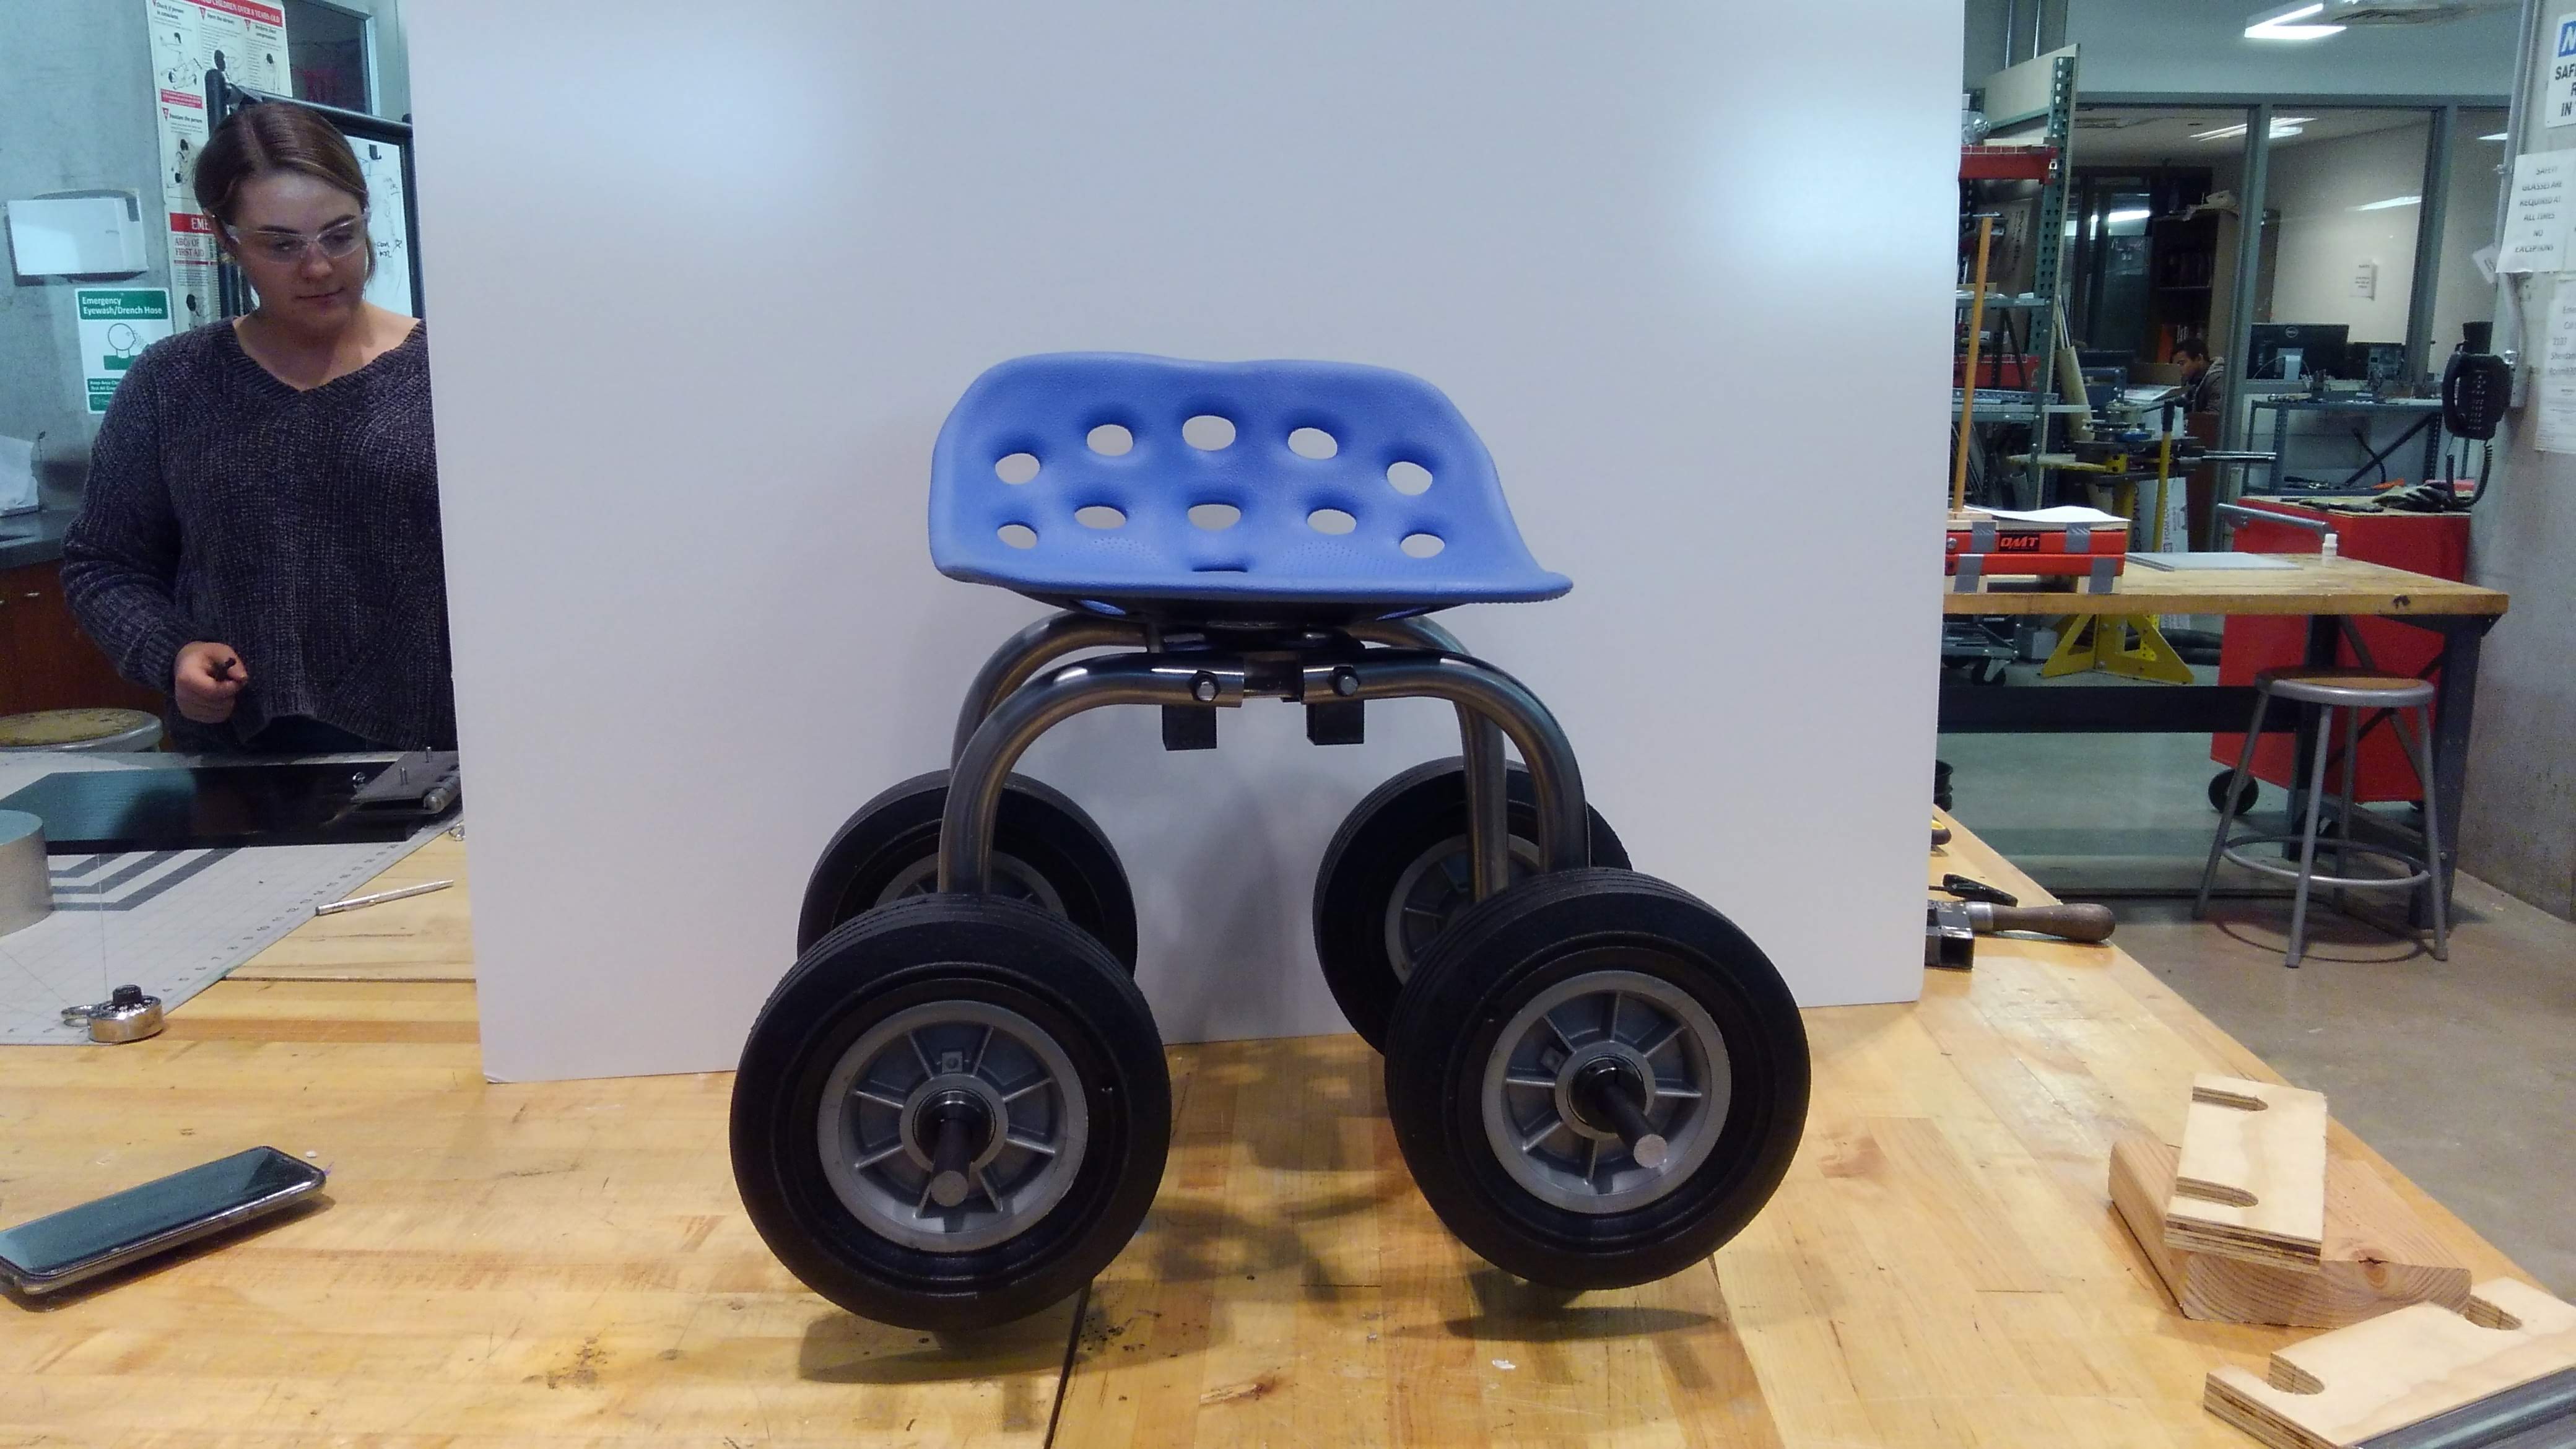 prototype v1c configured as a stool